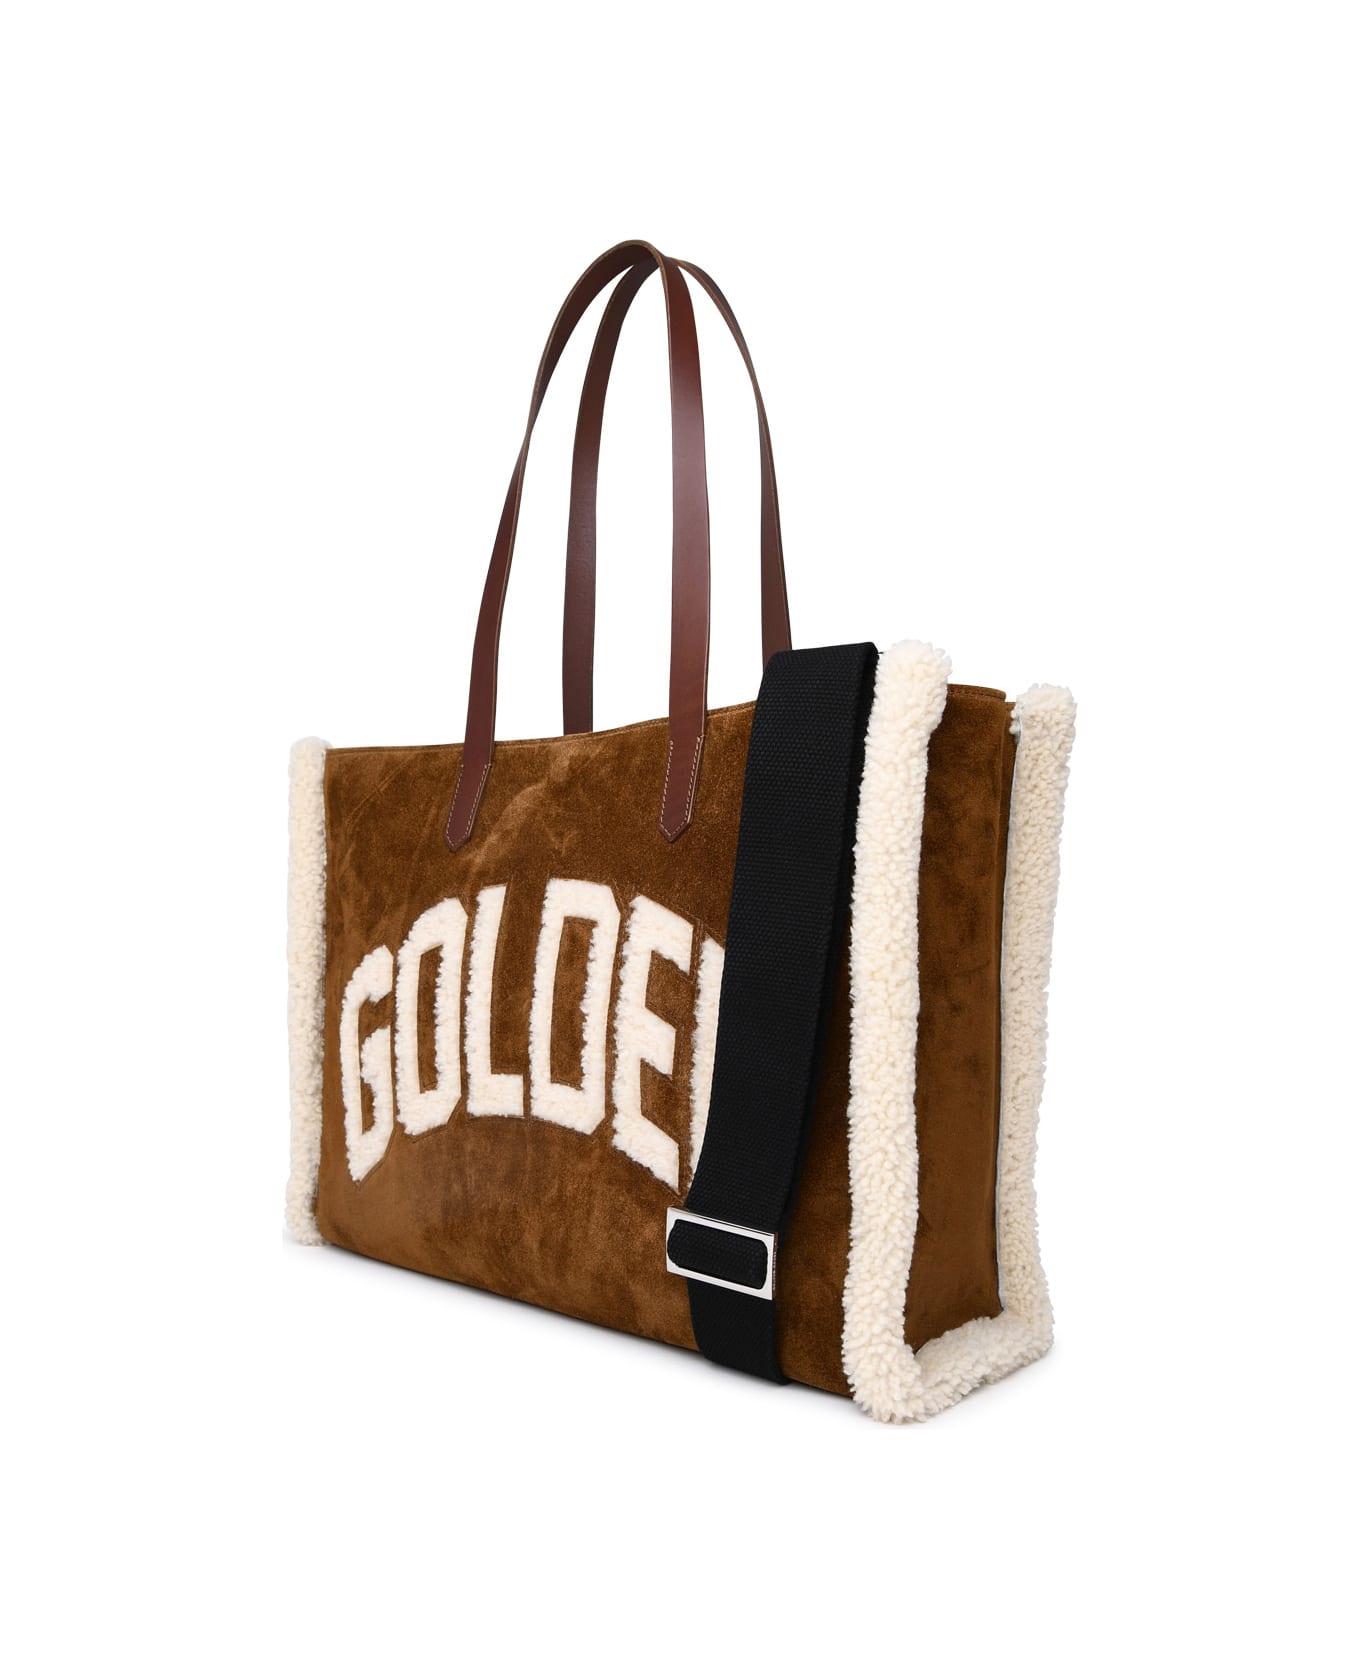 Golden Goose California Shopper Bag - Camel トートバッグ